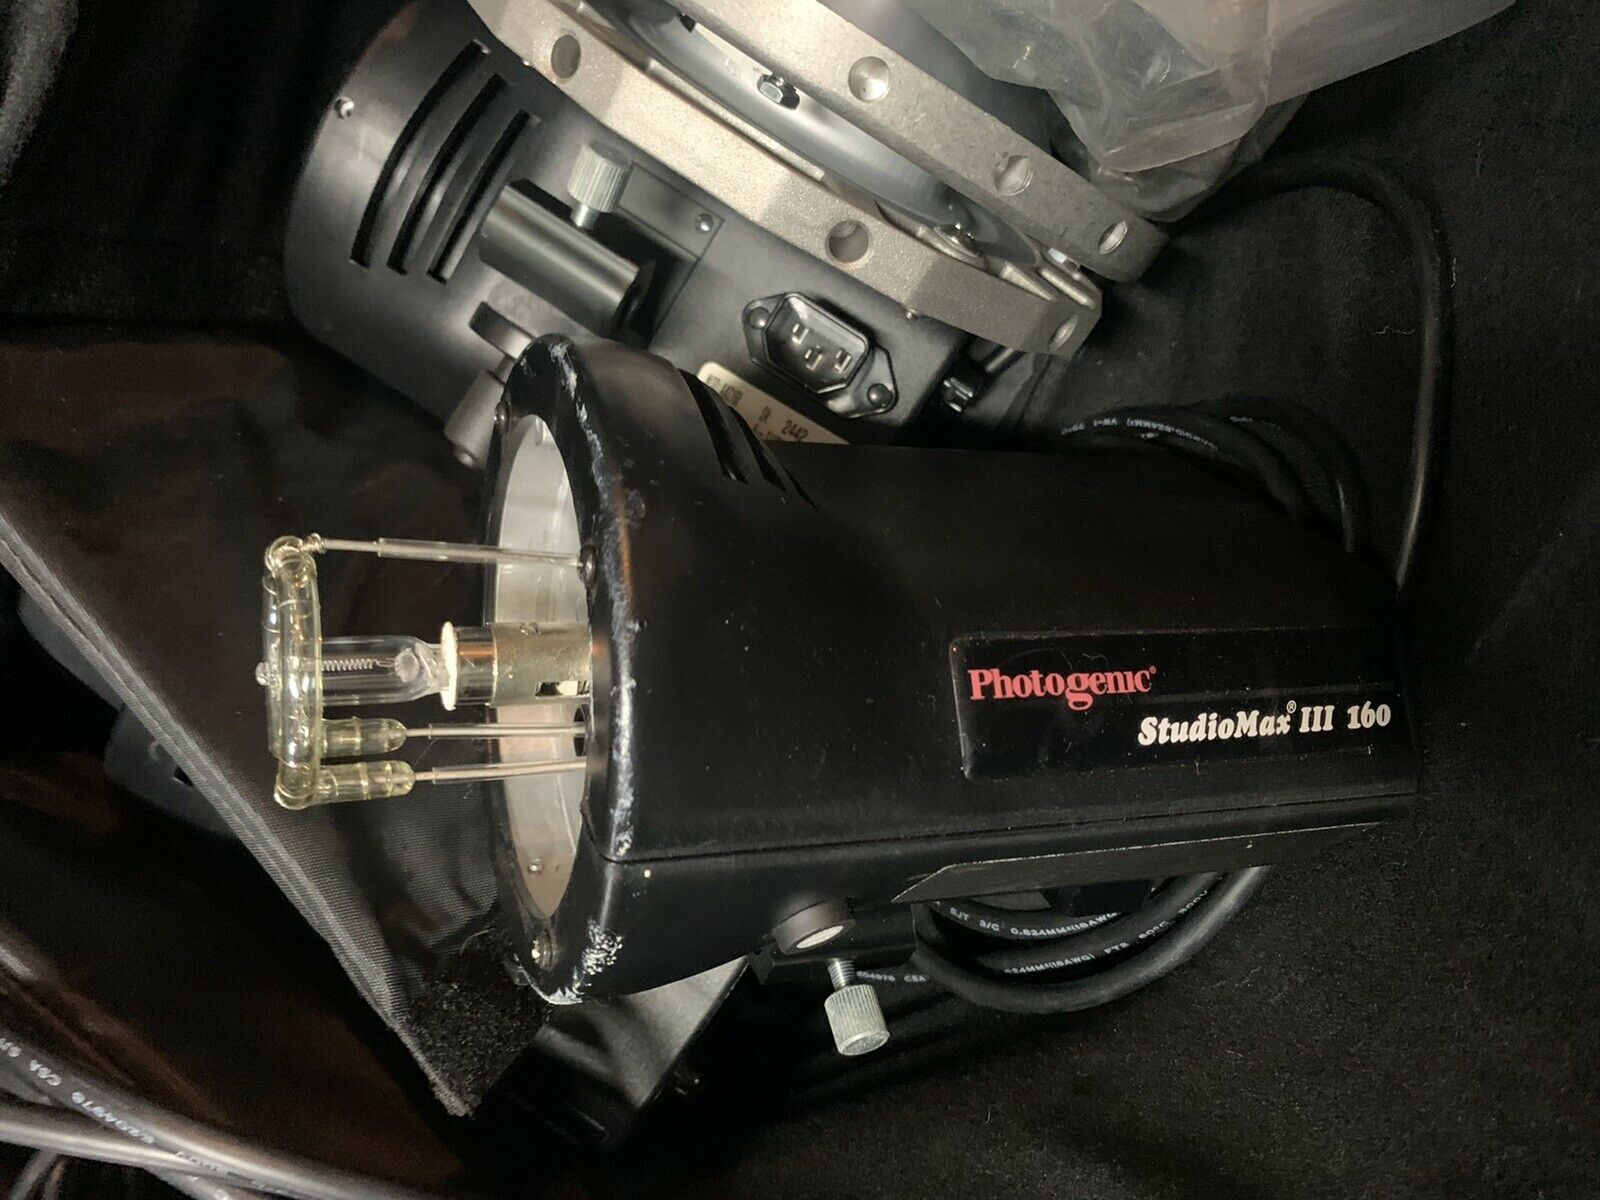 Photogenic AKC160 Studiomax III 160W/s Monolight